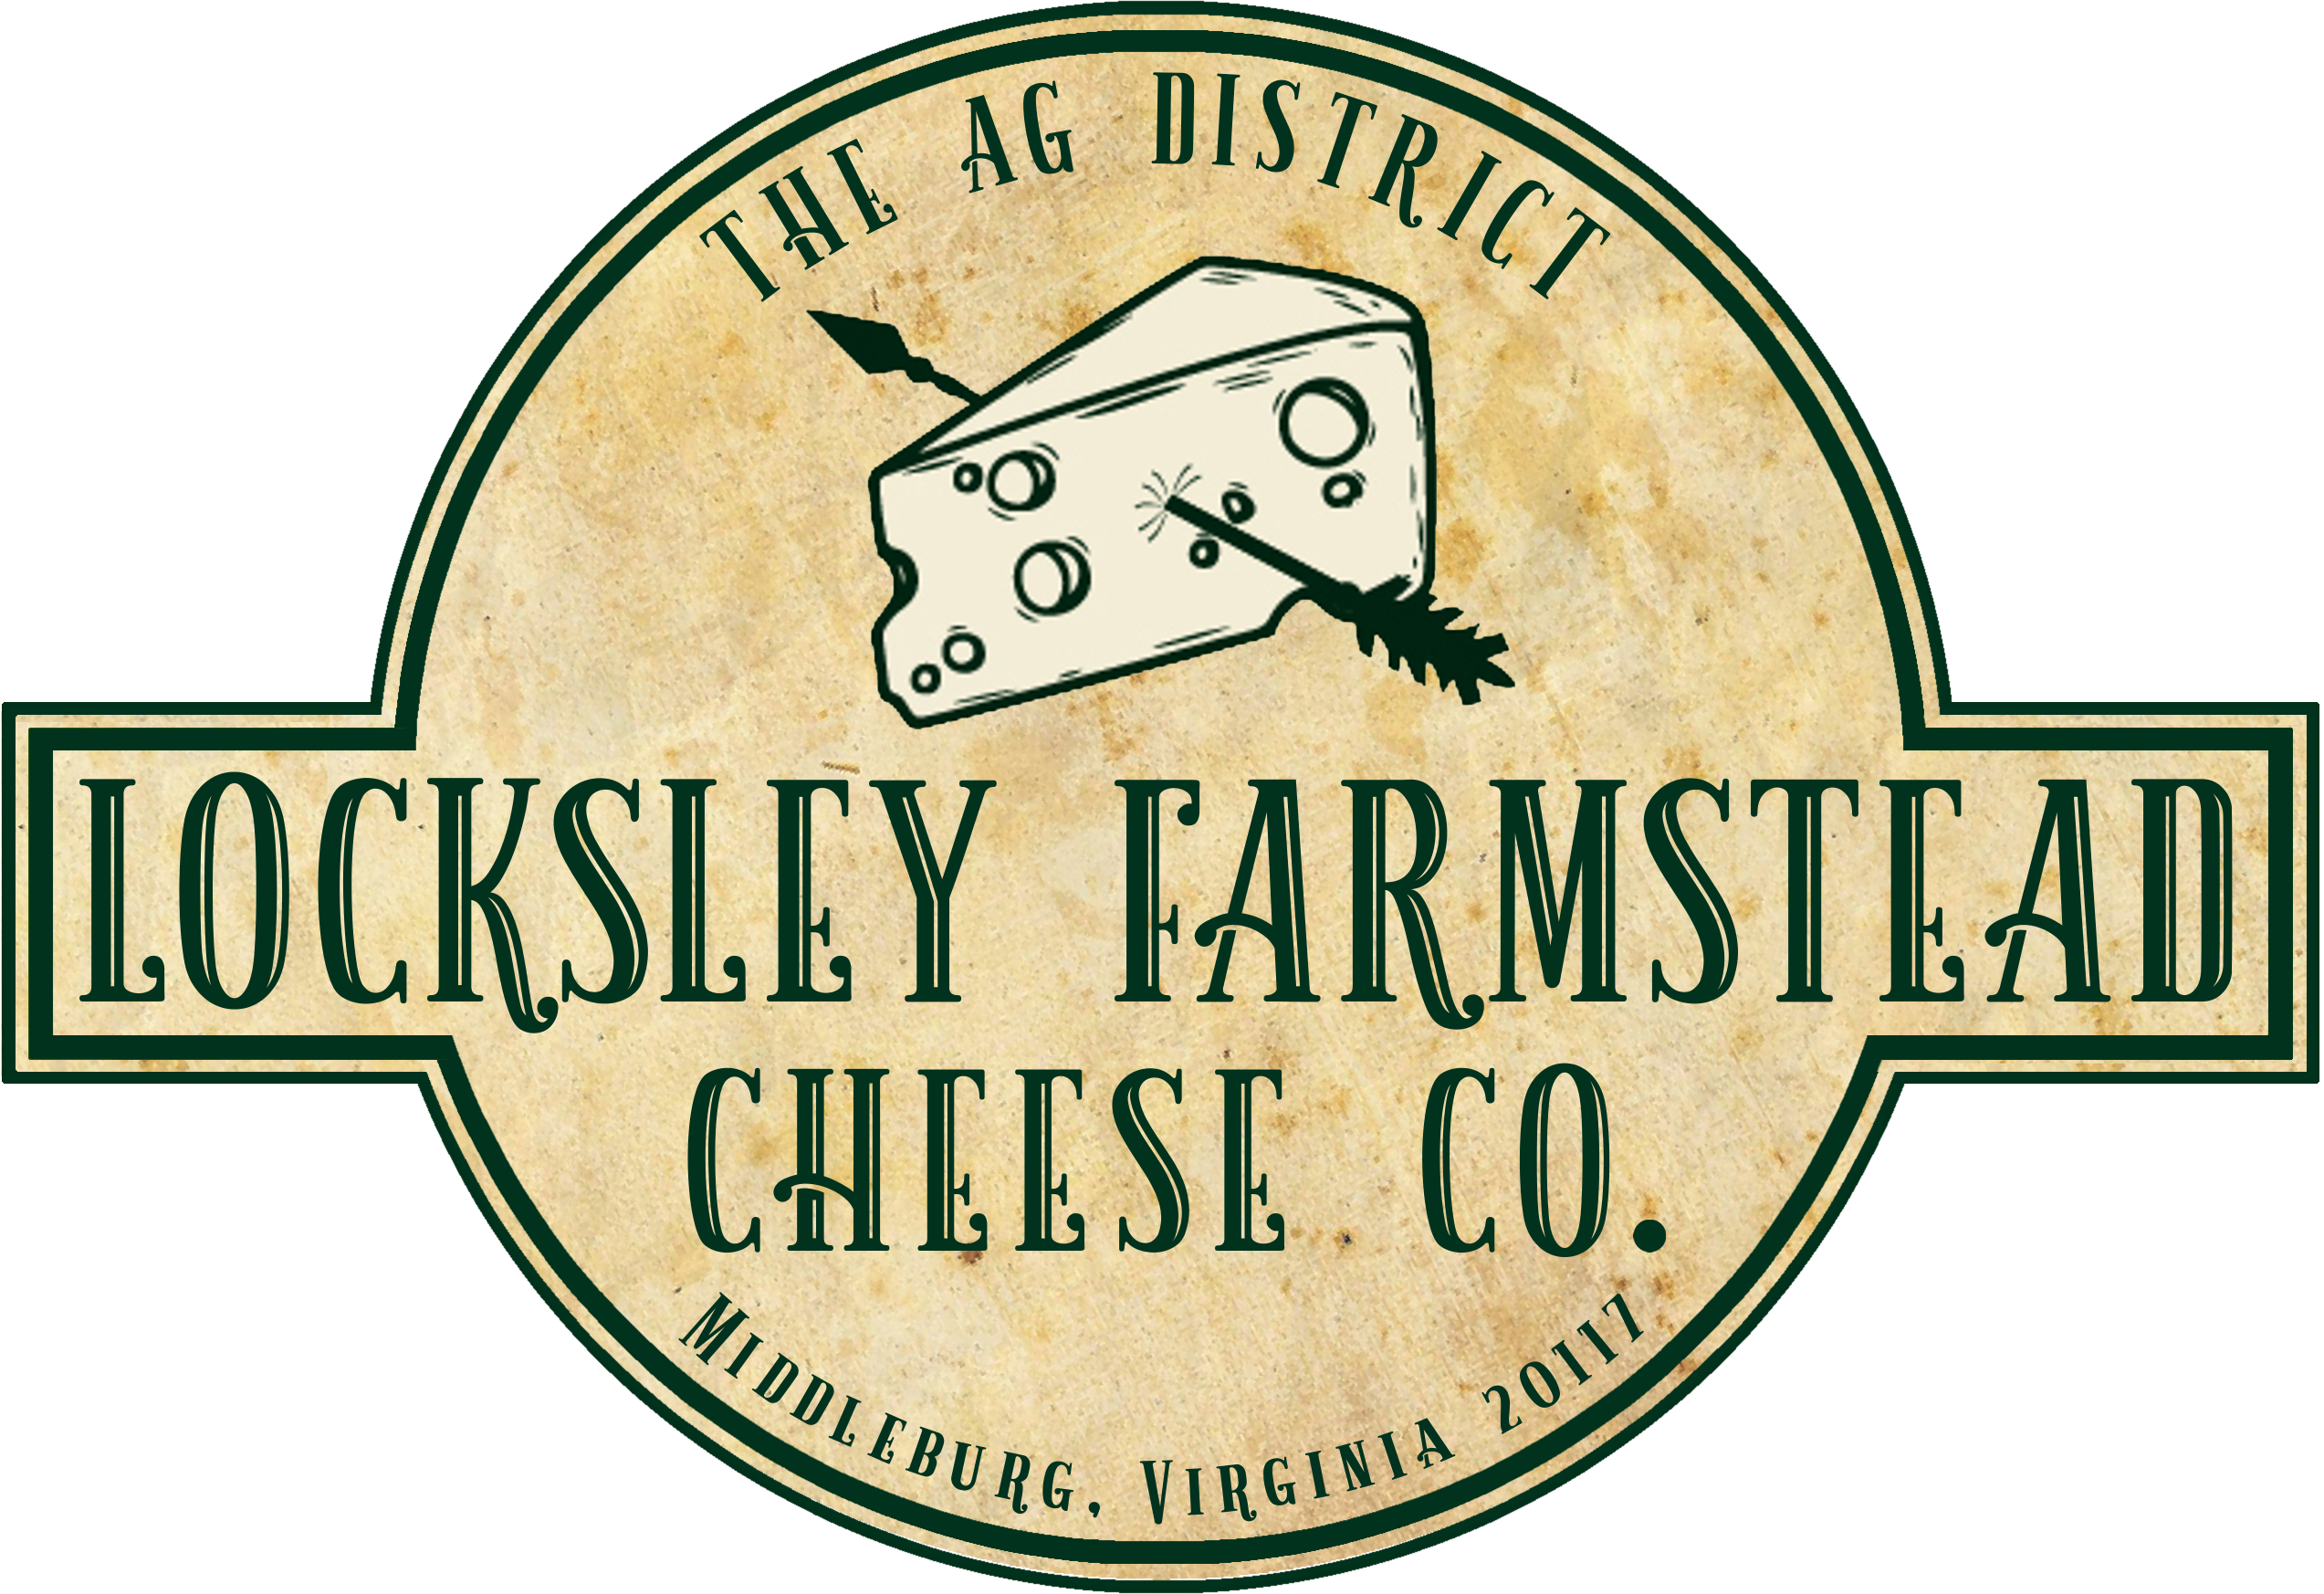 Locksley Farmstead Cheese Co